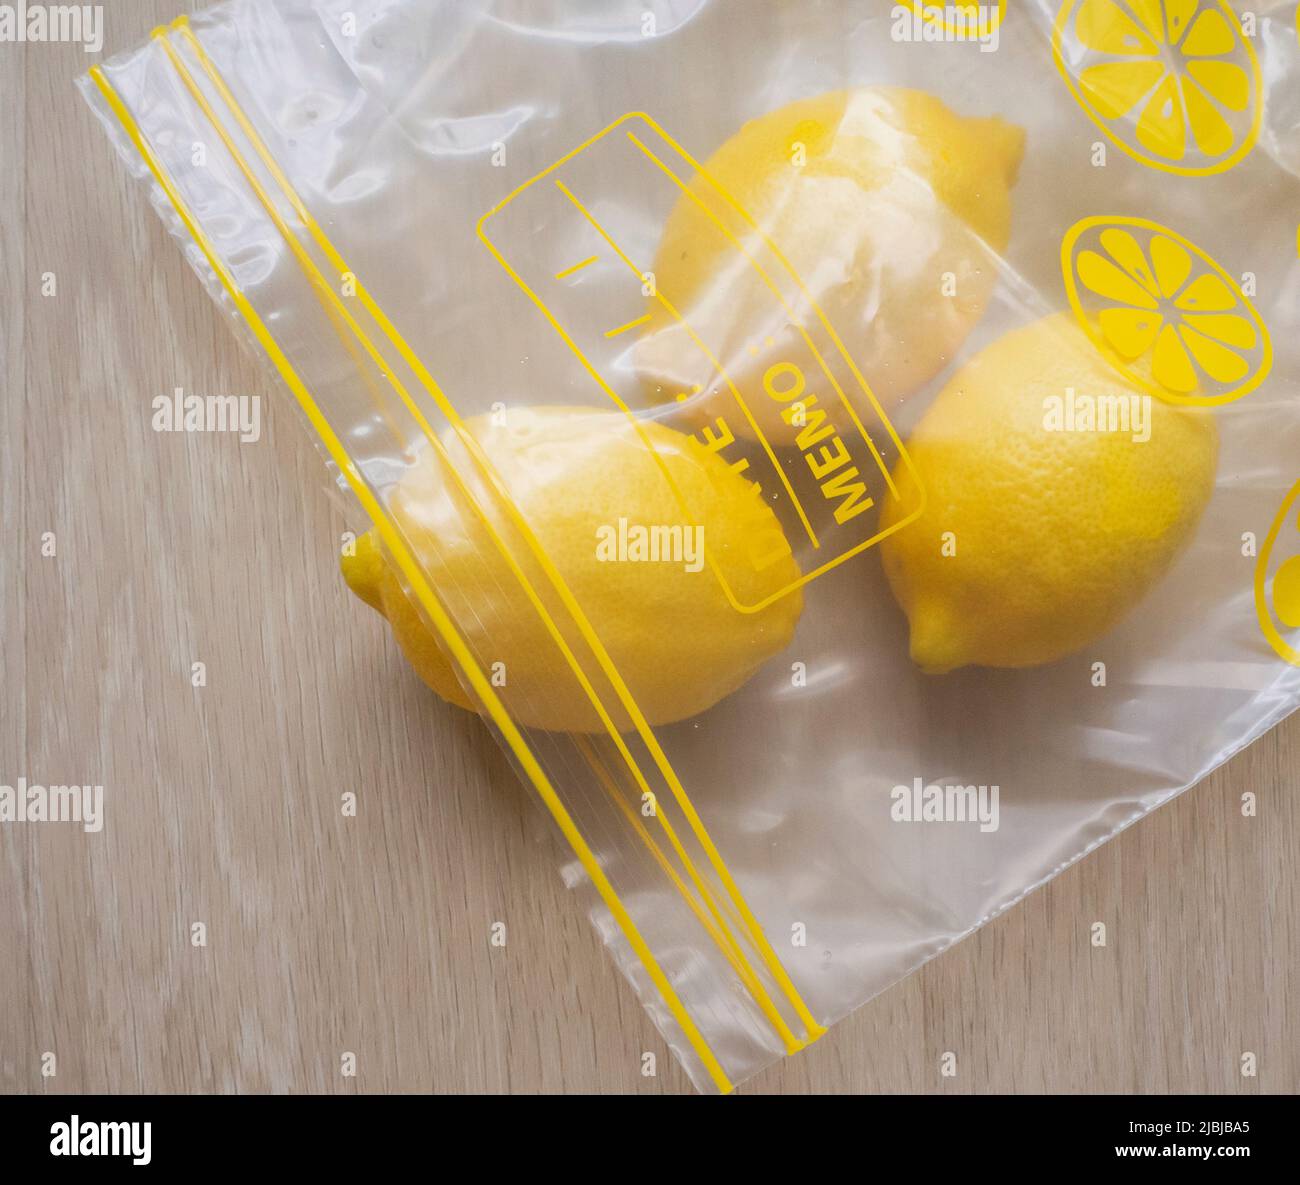 https://c8.alamy.com/comp/2JBJBA5/trio-of-fresh-lemons-in-a-food-storage-ziplock-bag-on-a-light-wood-background-2JBJBA5.jpg